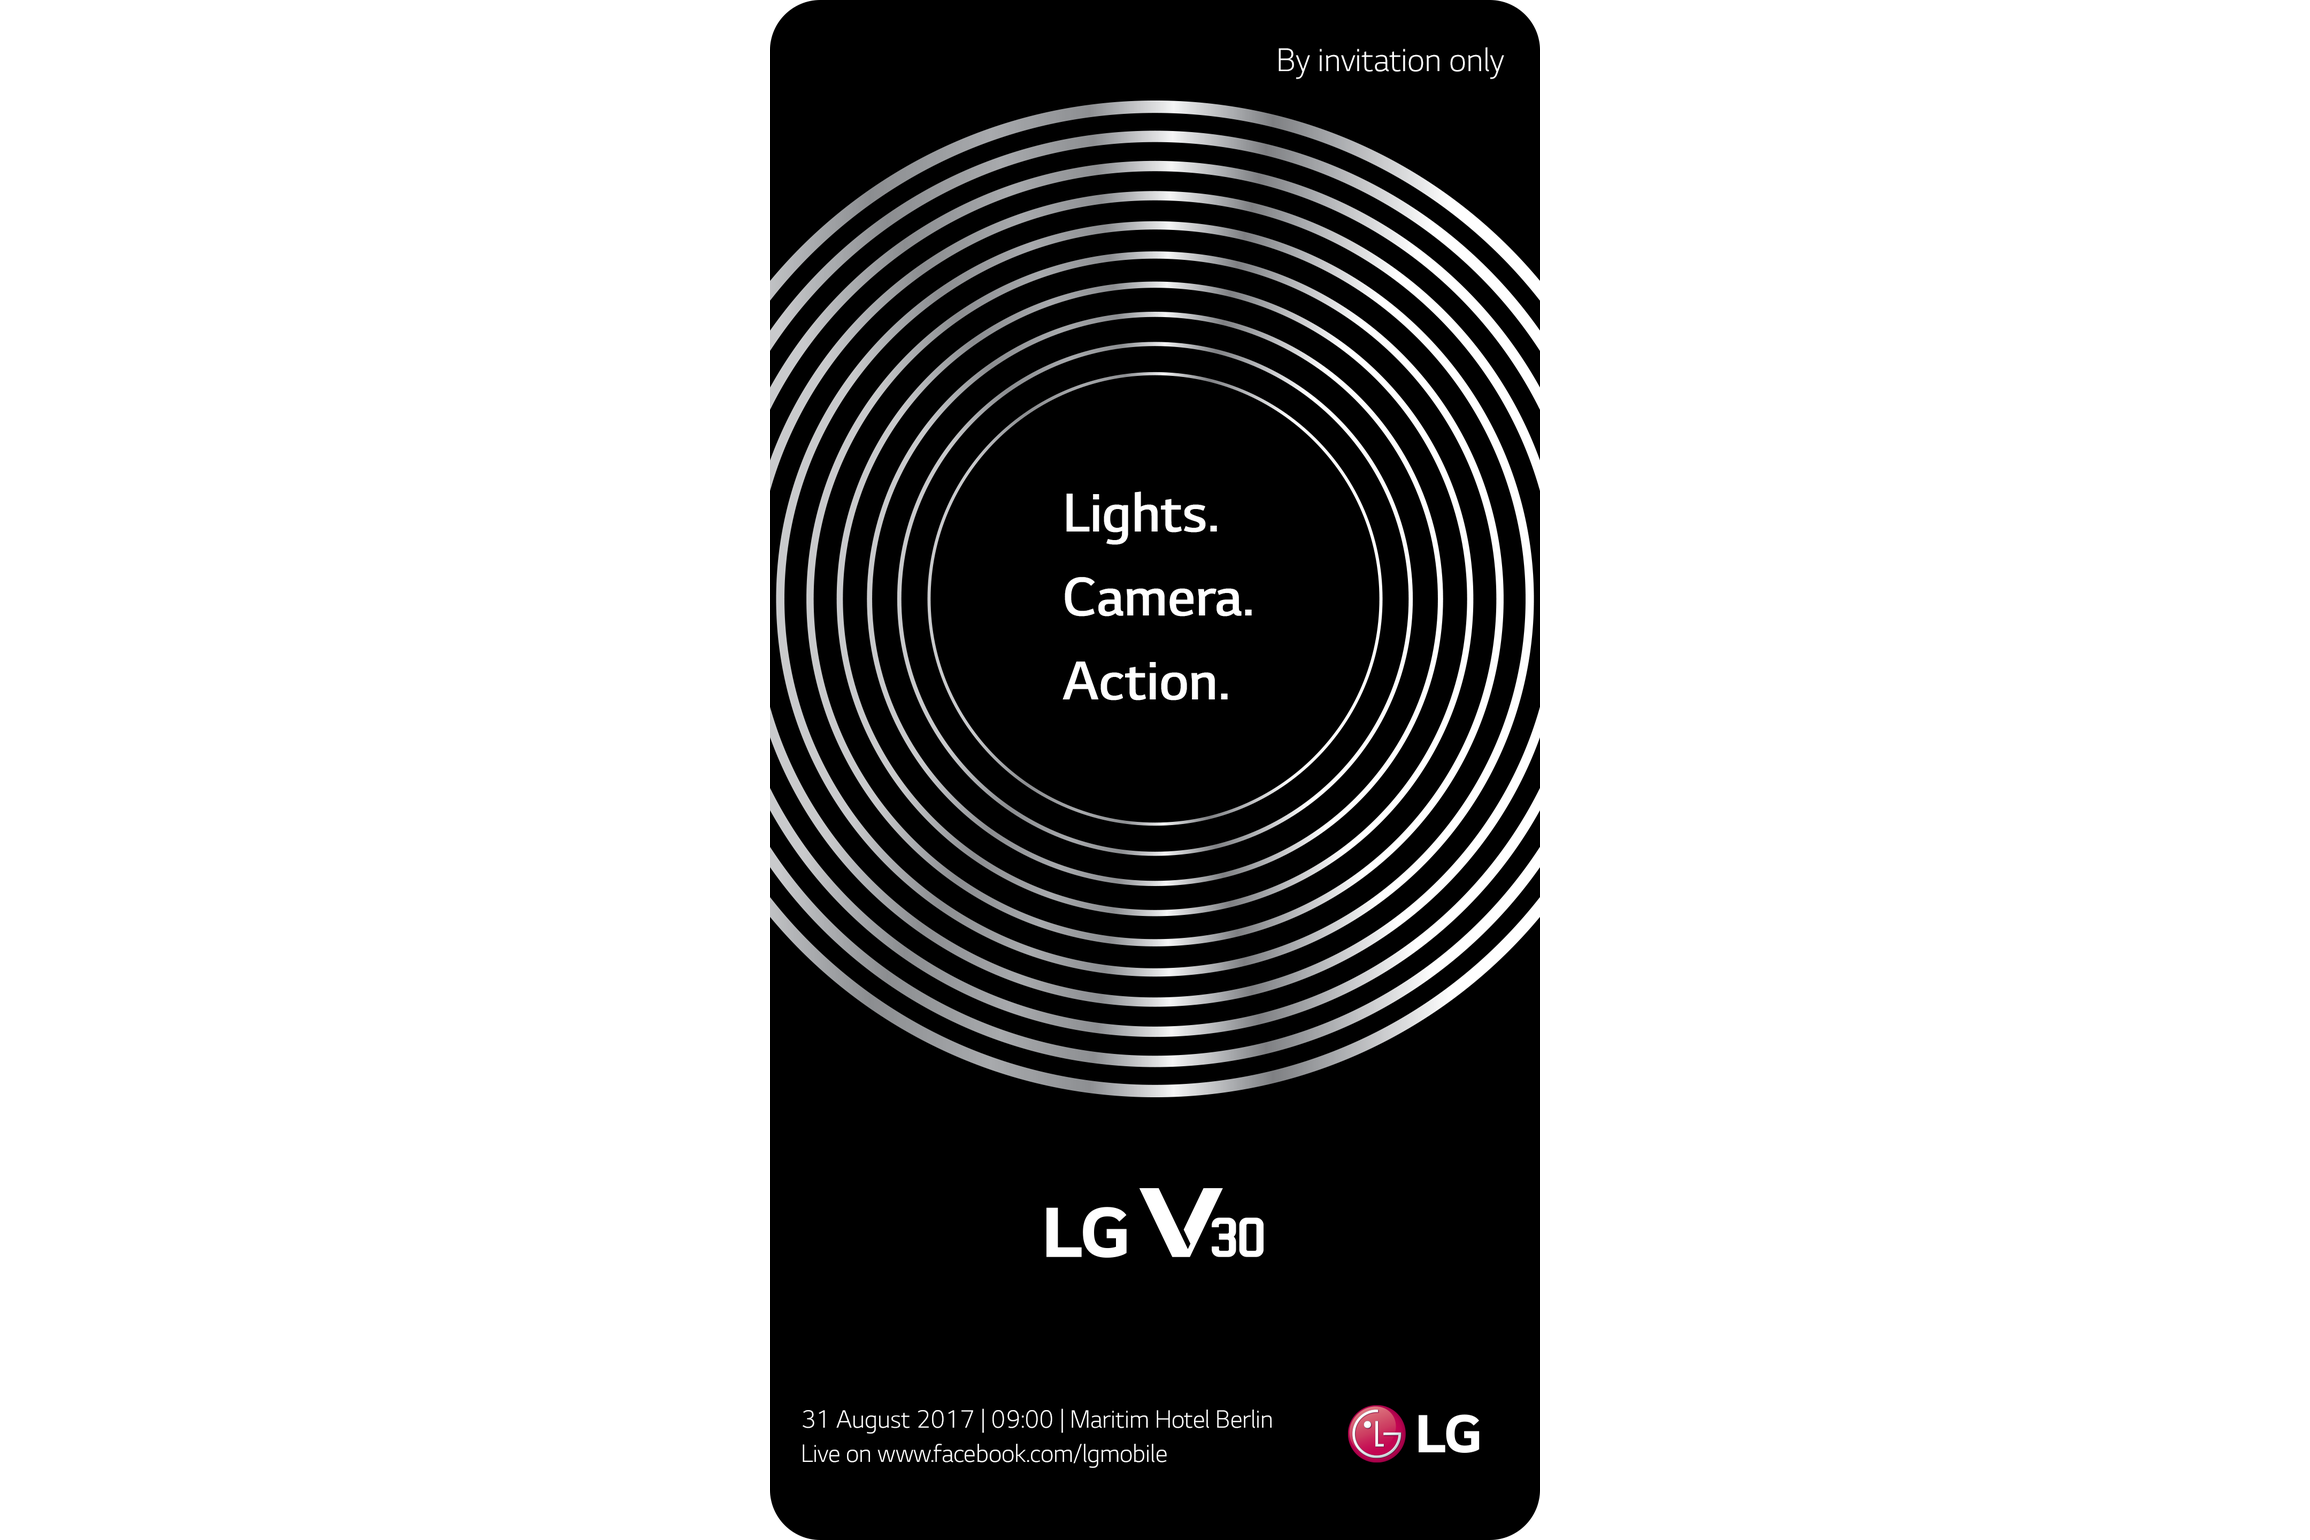 LG V30 Invitation LG Teases Camera For Flagship V30 Smartphone